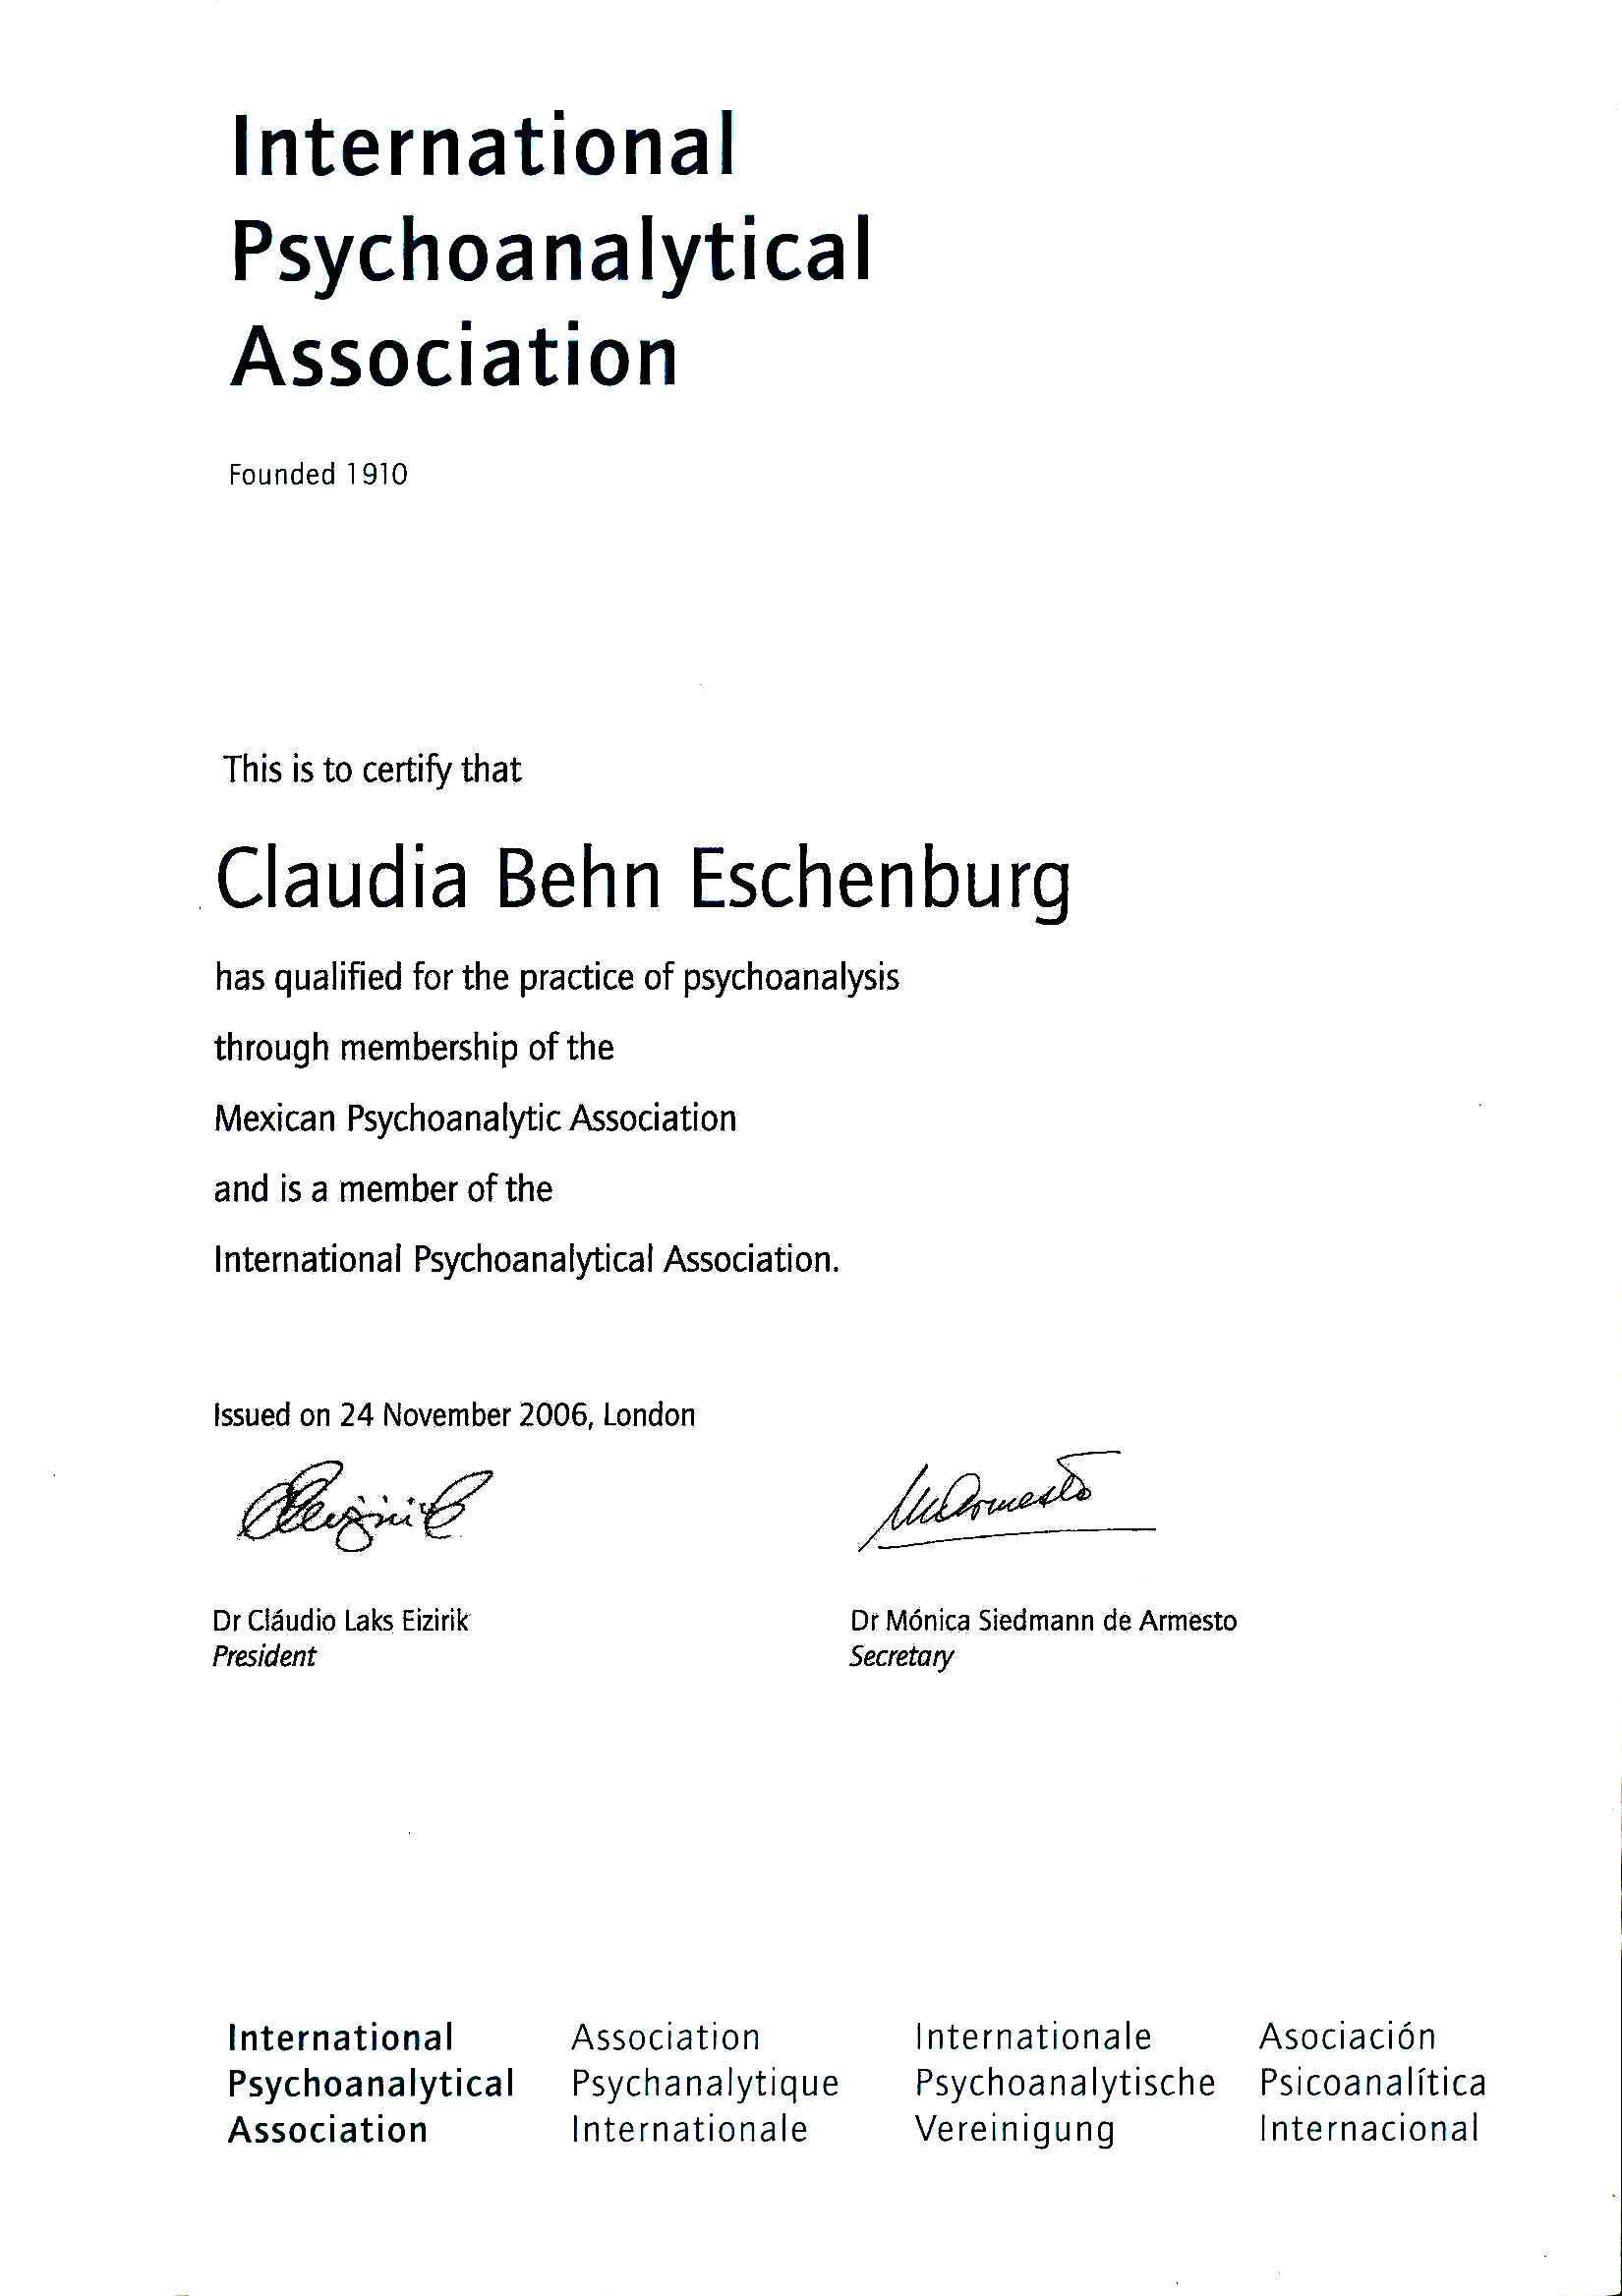 Dr. Claudia Behn-Eschenburg as IPA member